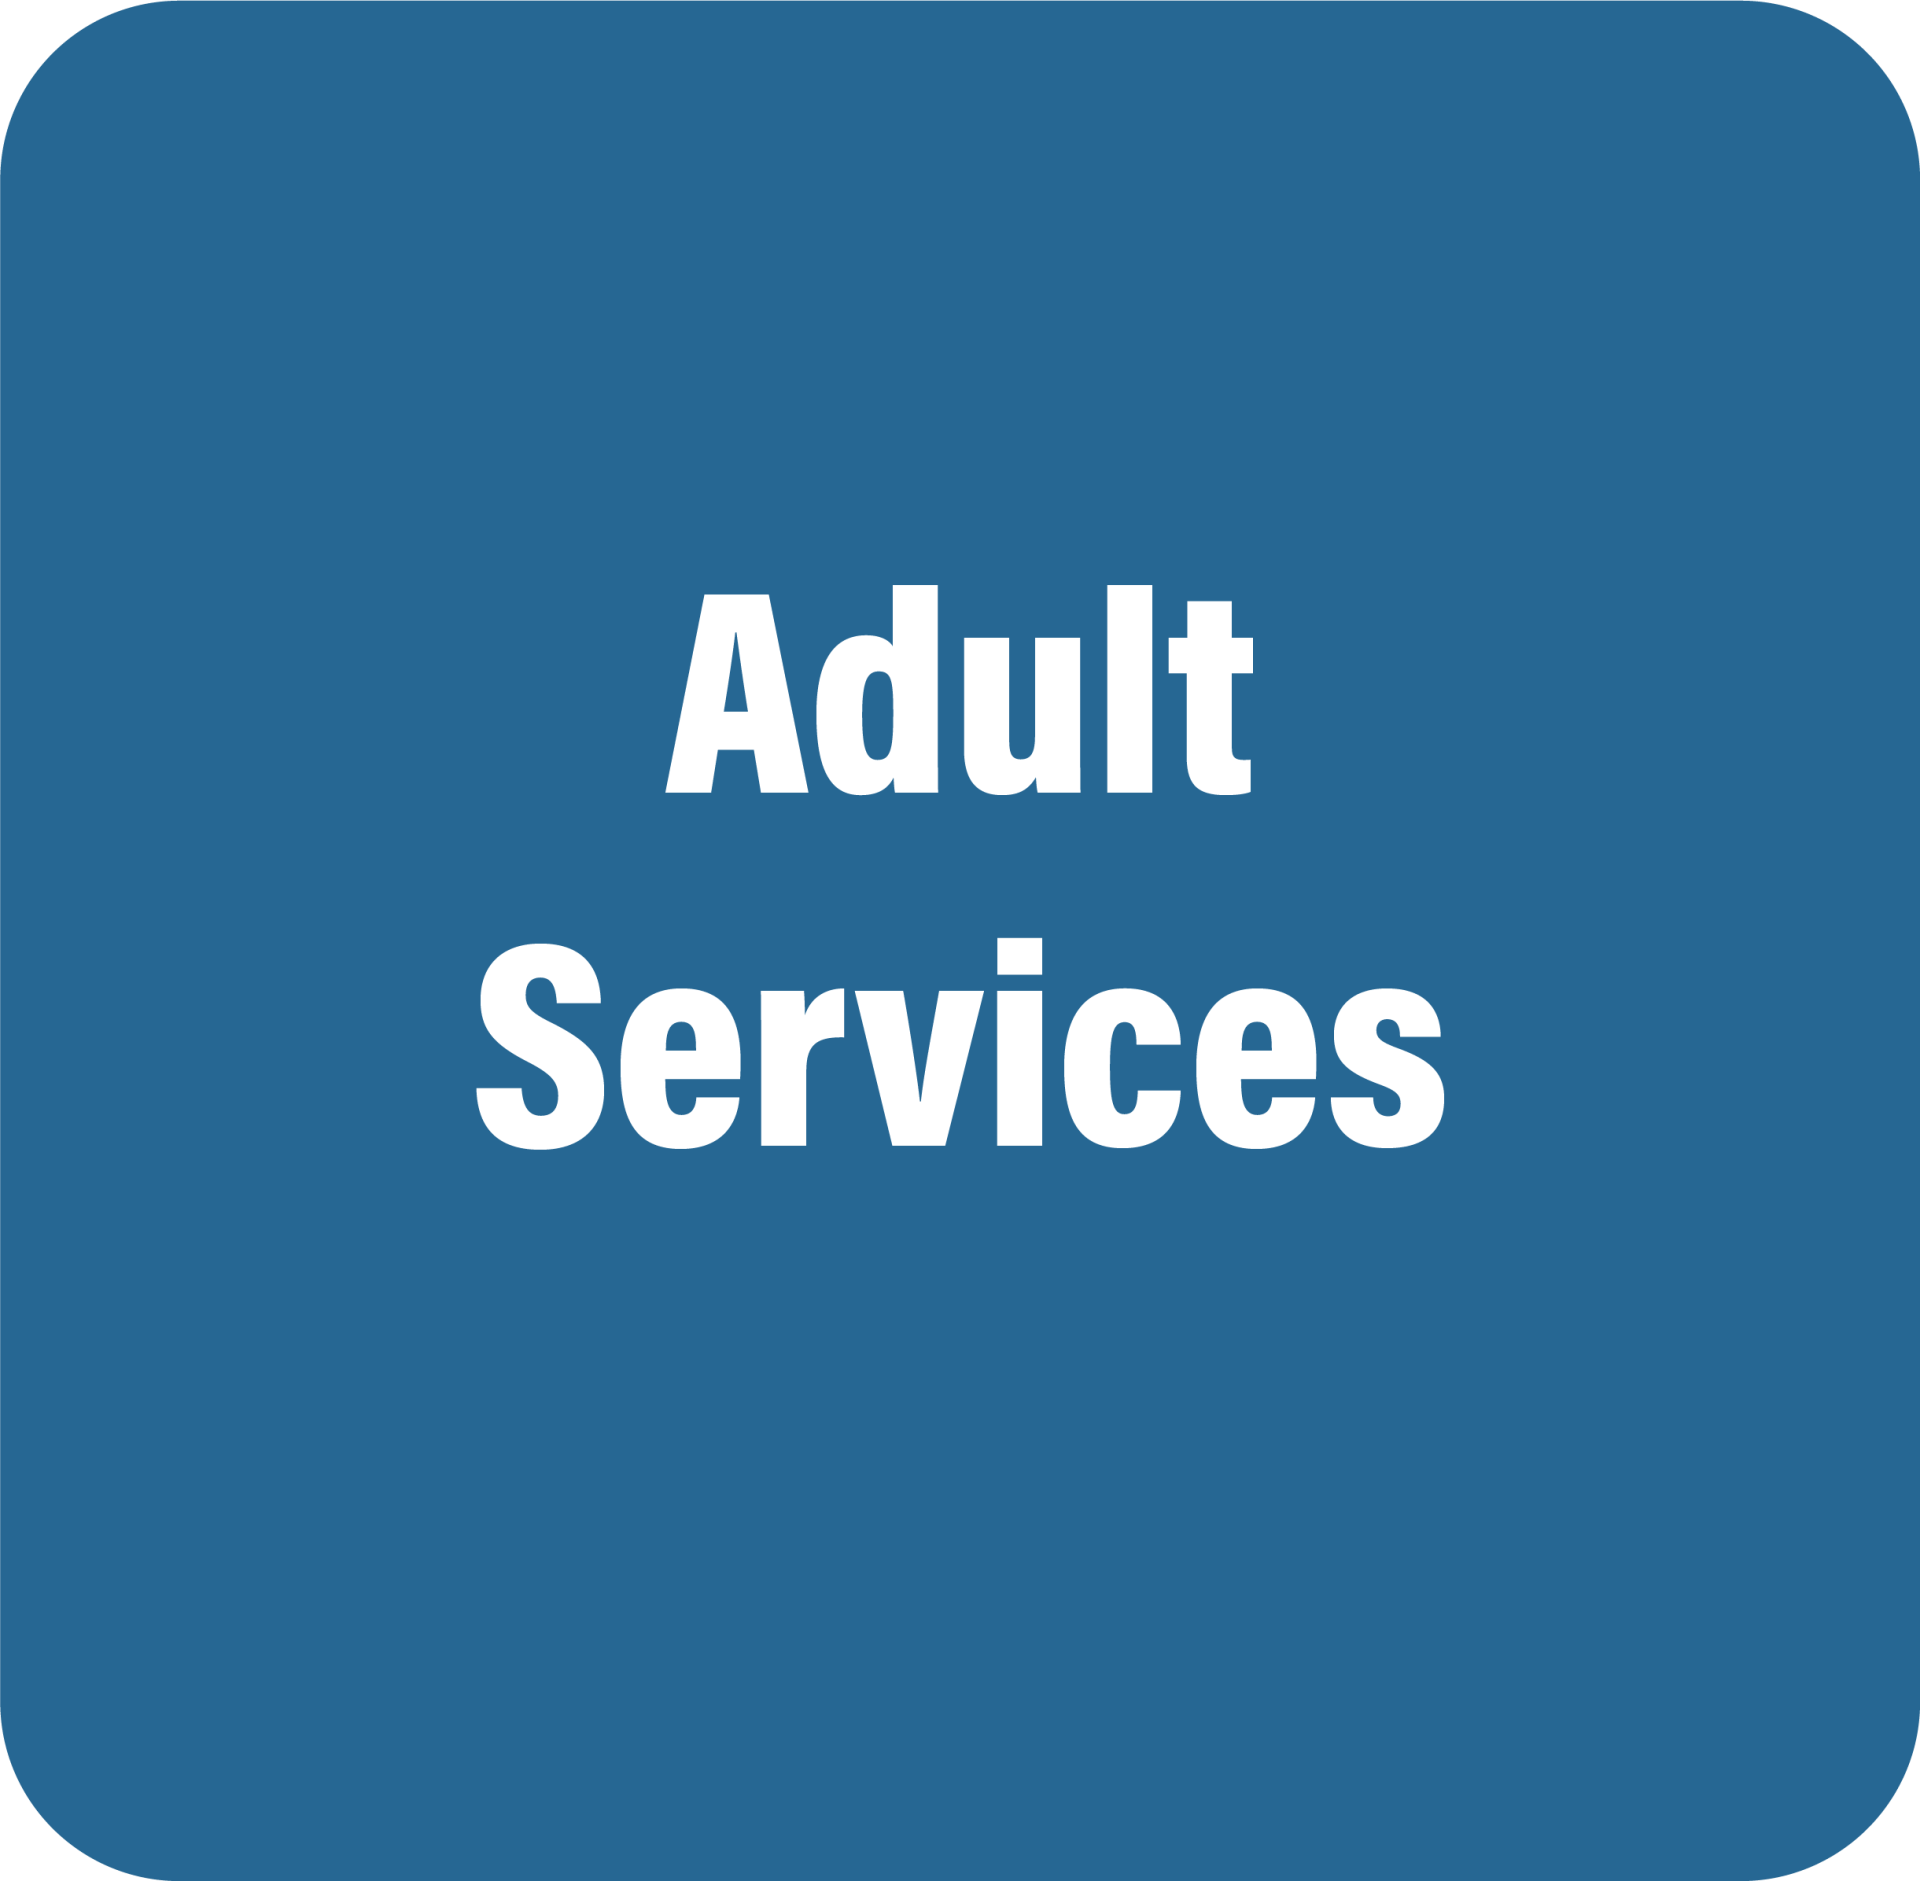 Adult Services Button